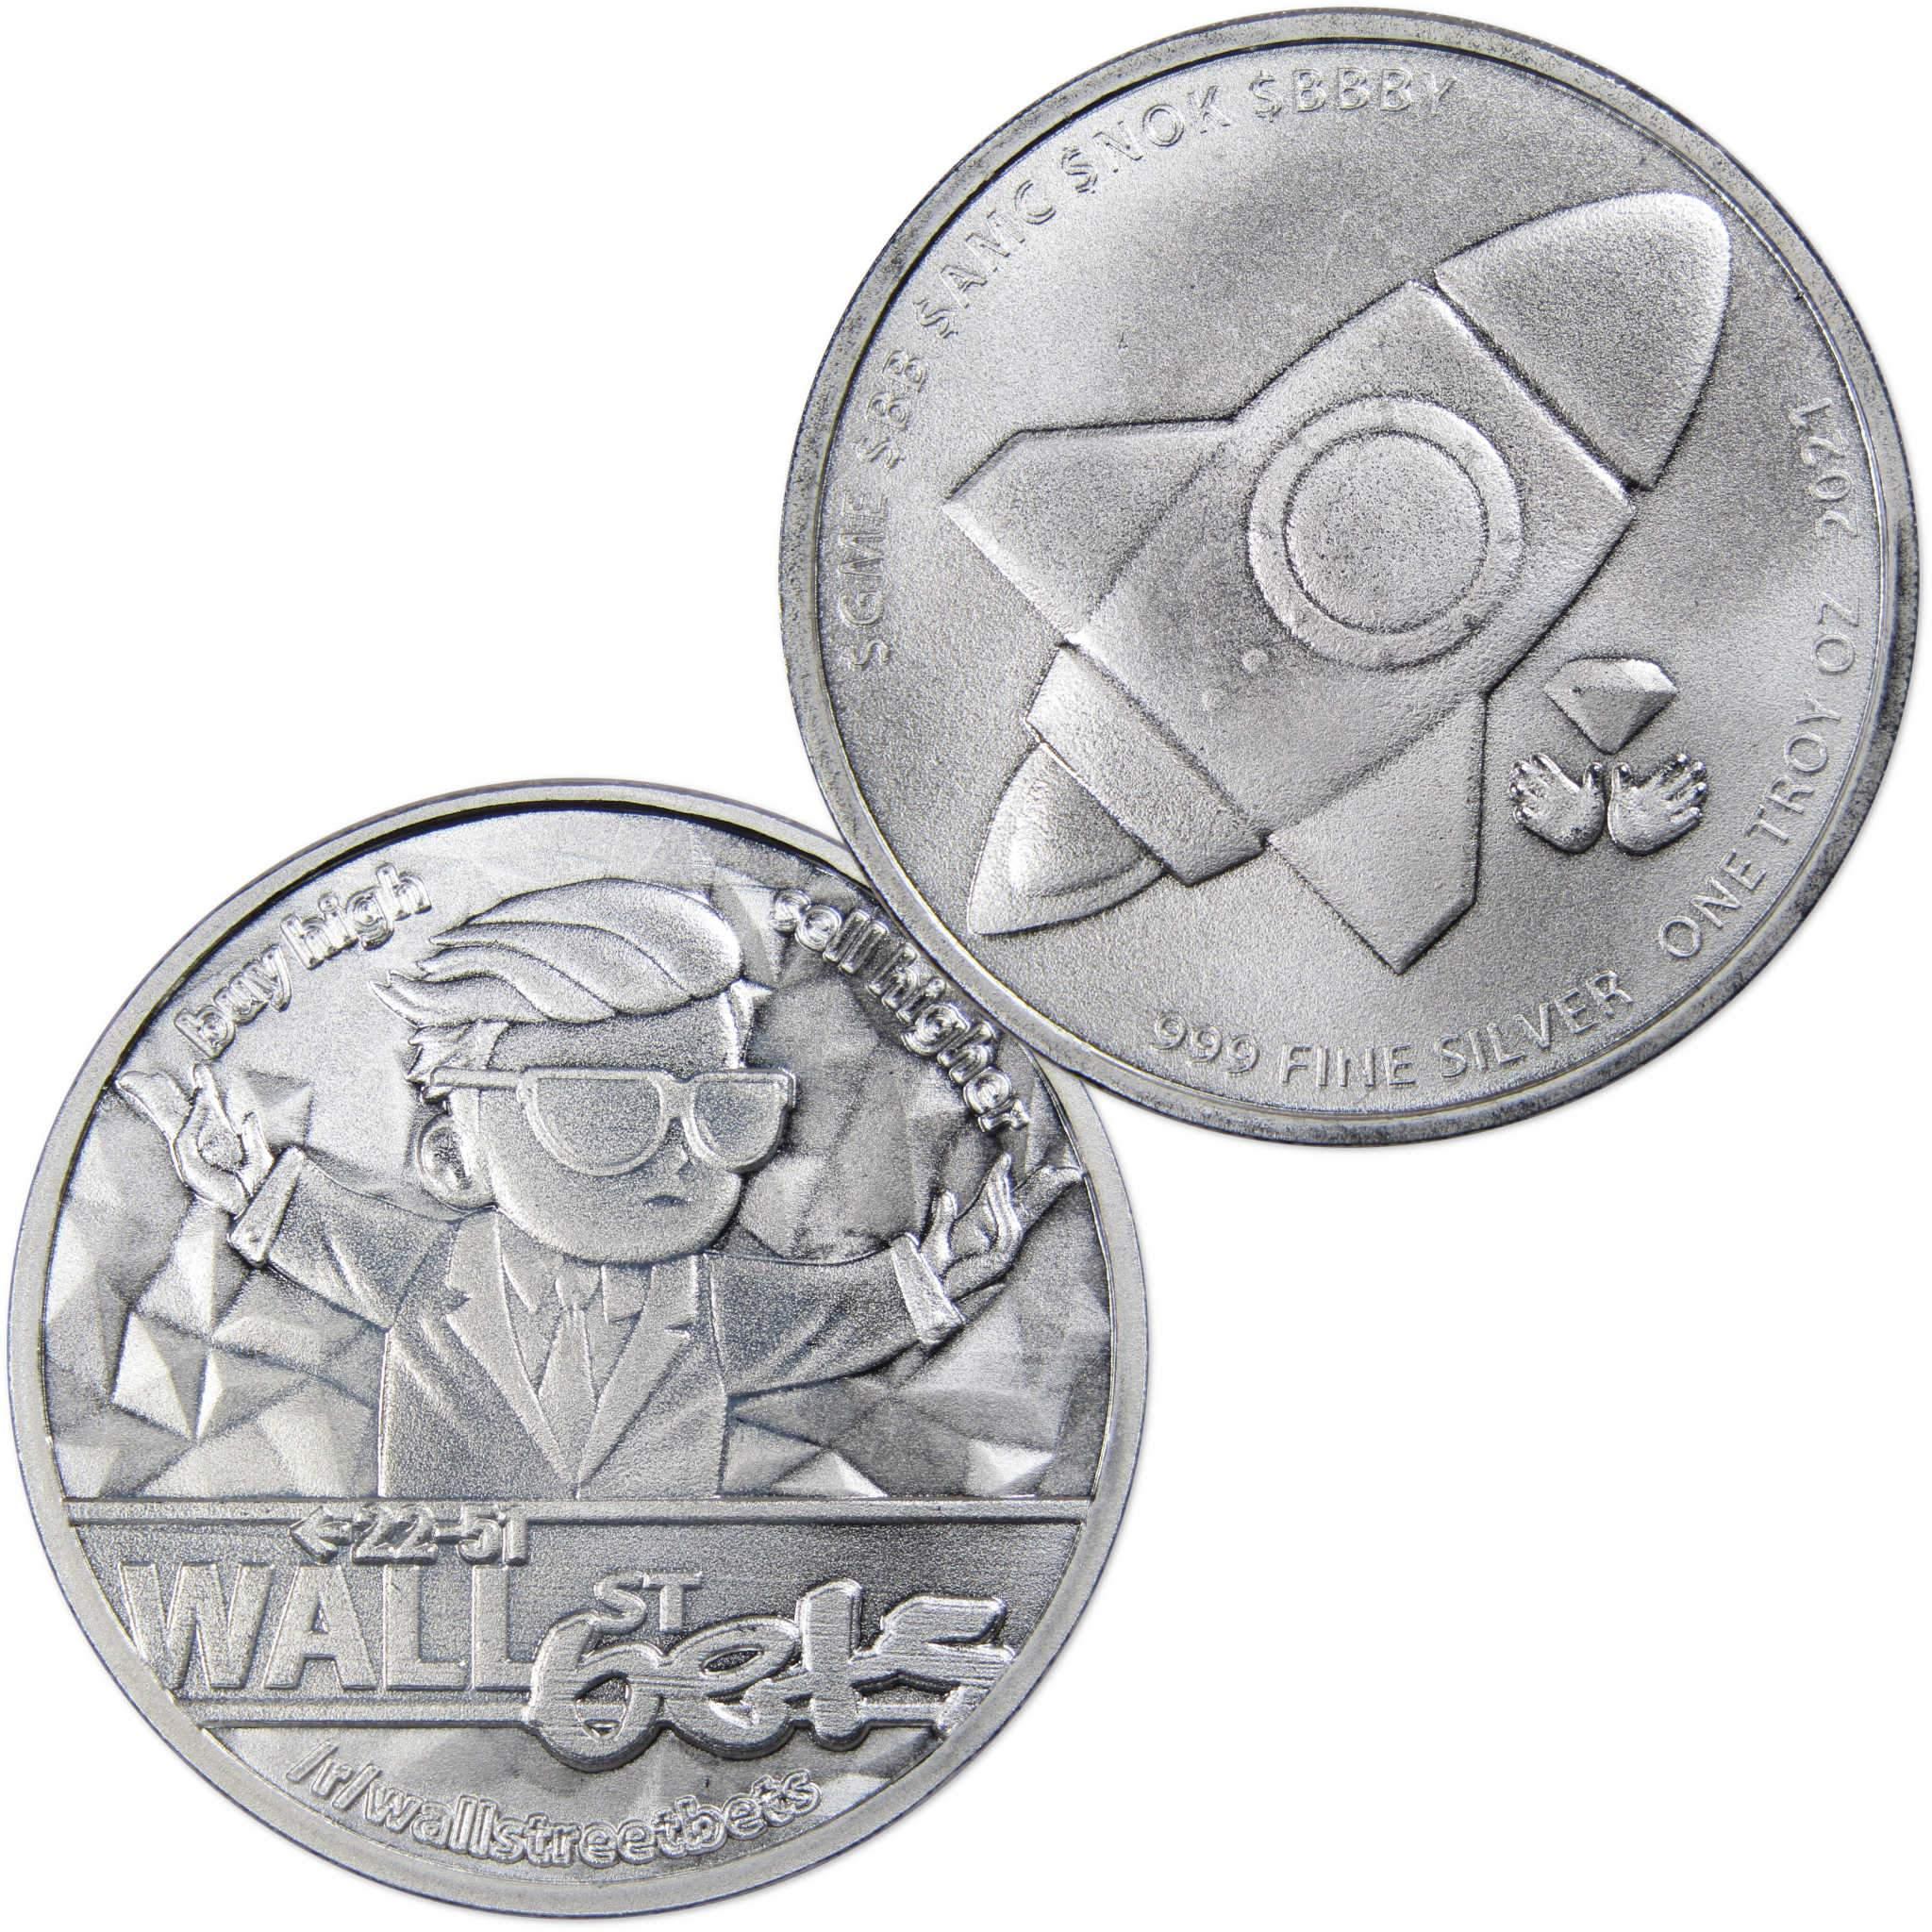 Wall Street Bets 1 oz .999 Fine Silver Round Diamond Hands WallStreetBets 2021